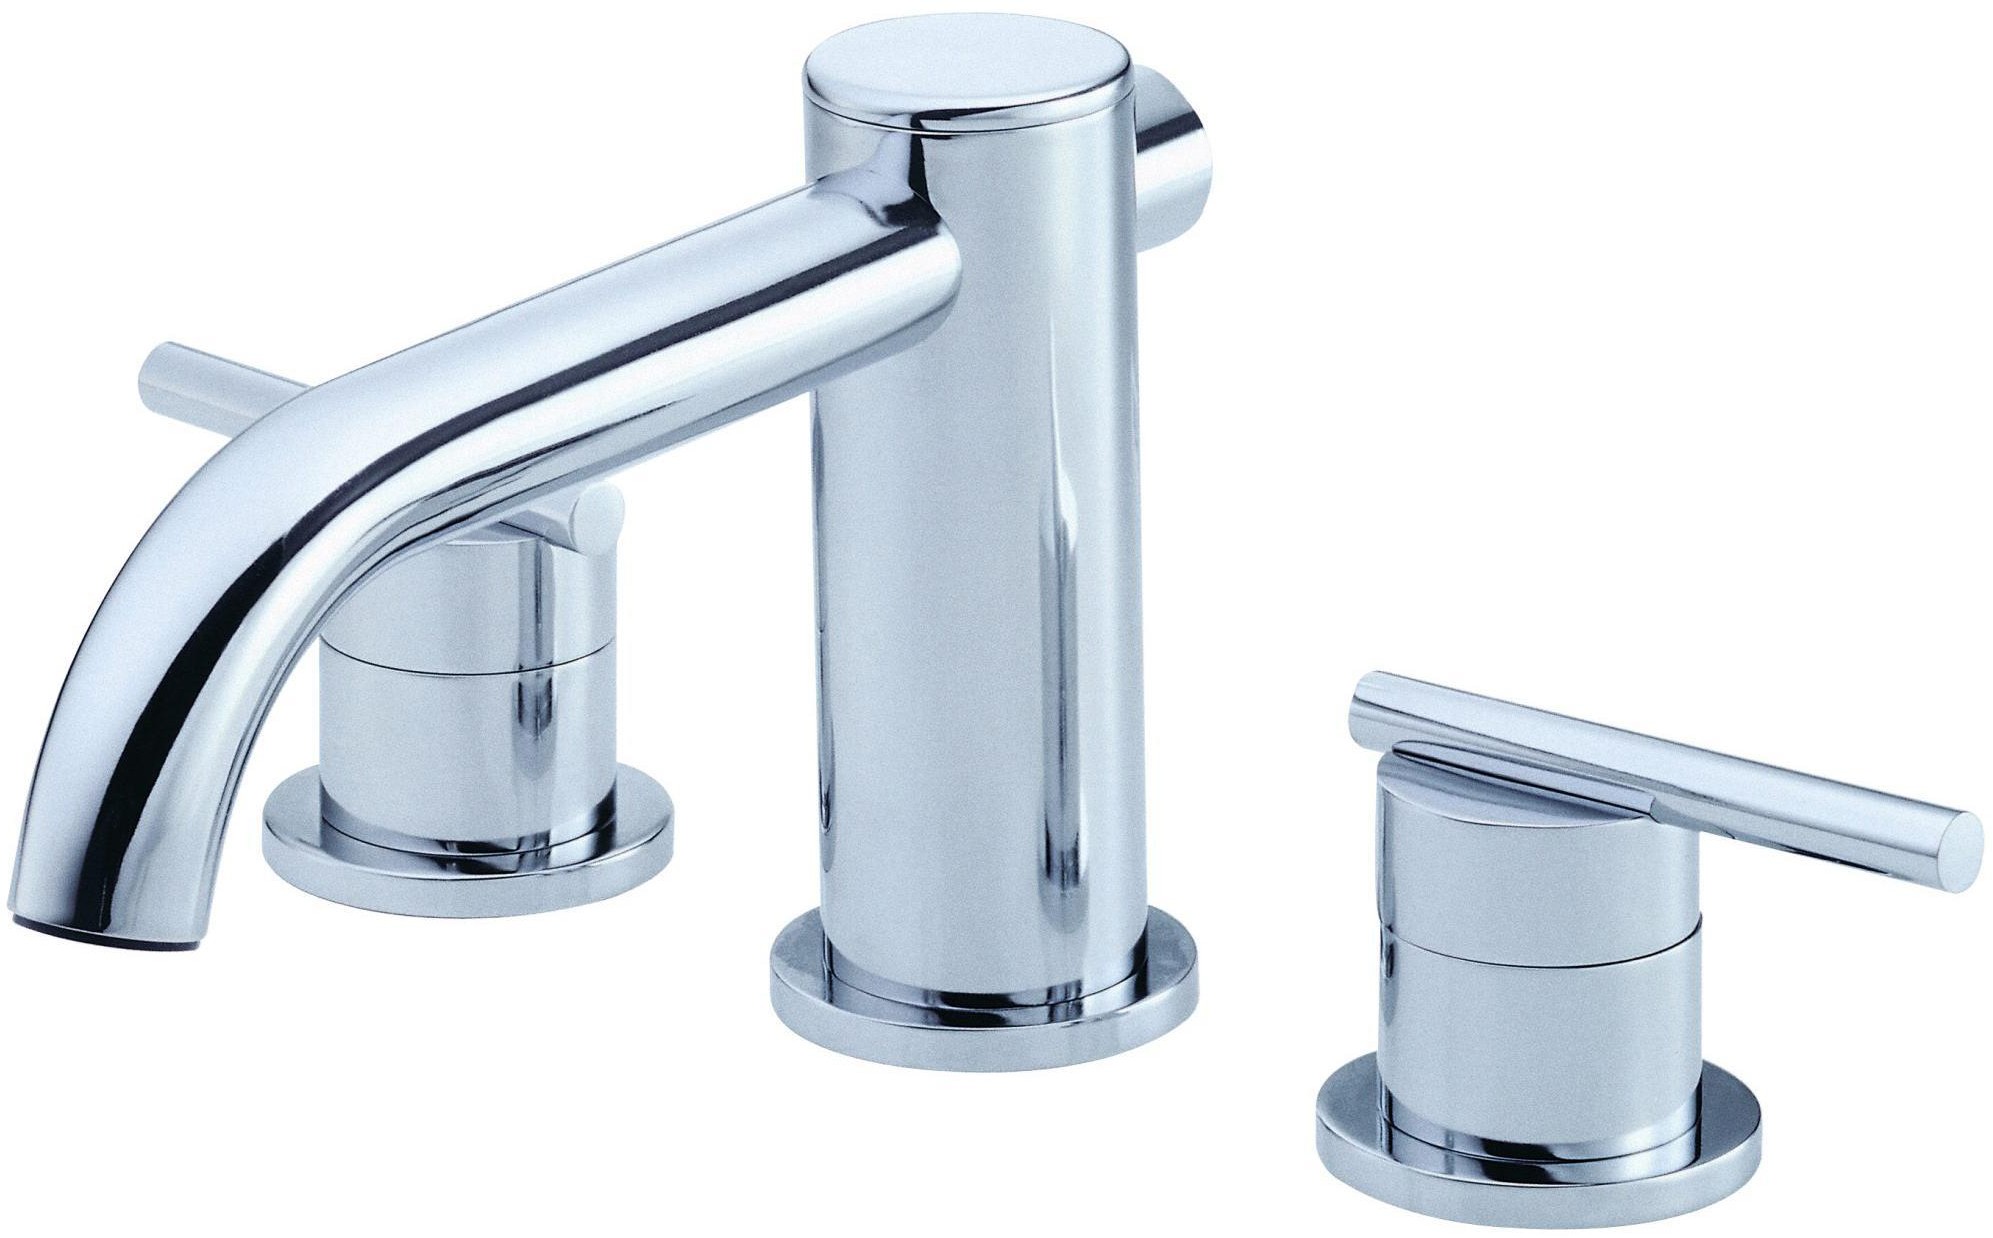 D305658t Parma Two Handle Roman Tub Faucet, Danze Bathroom Faucets